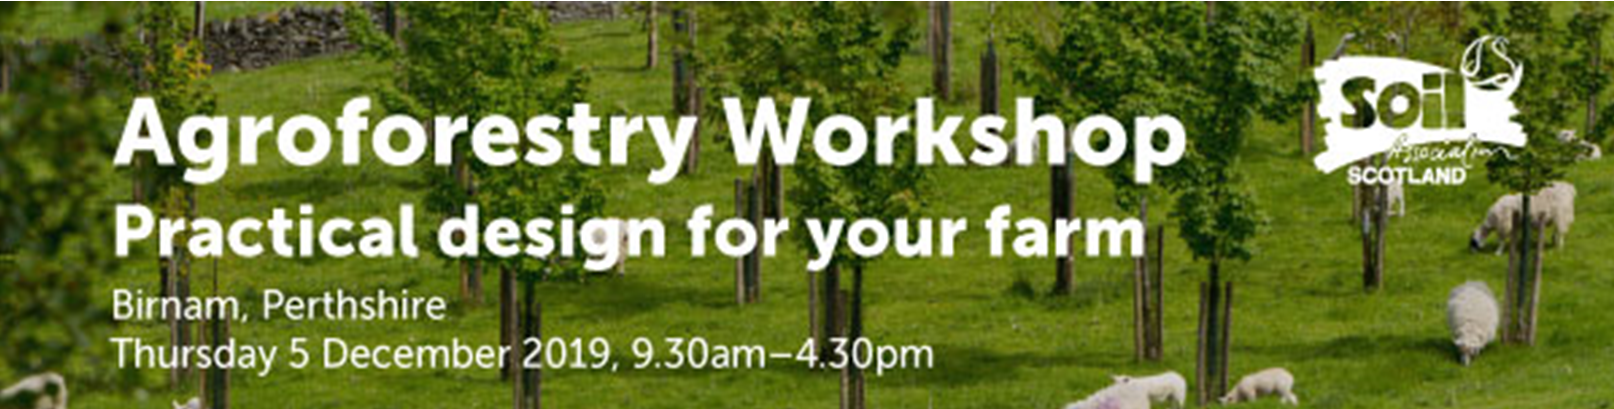 Agroforestry Workshop graphic